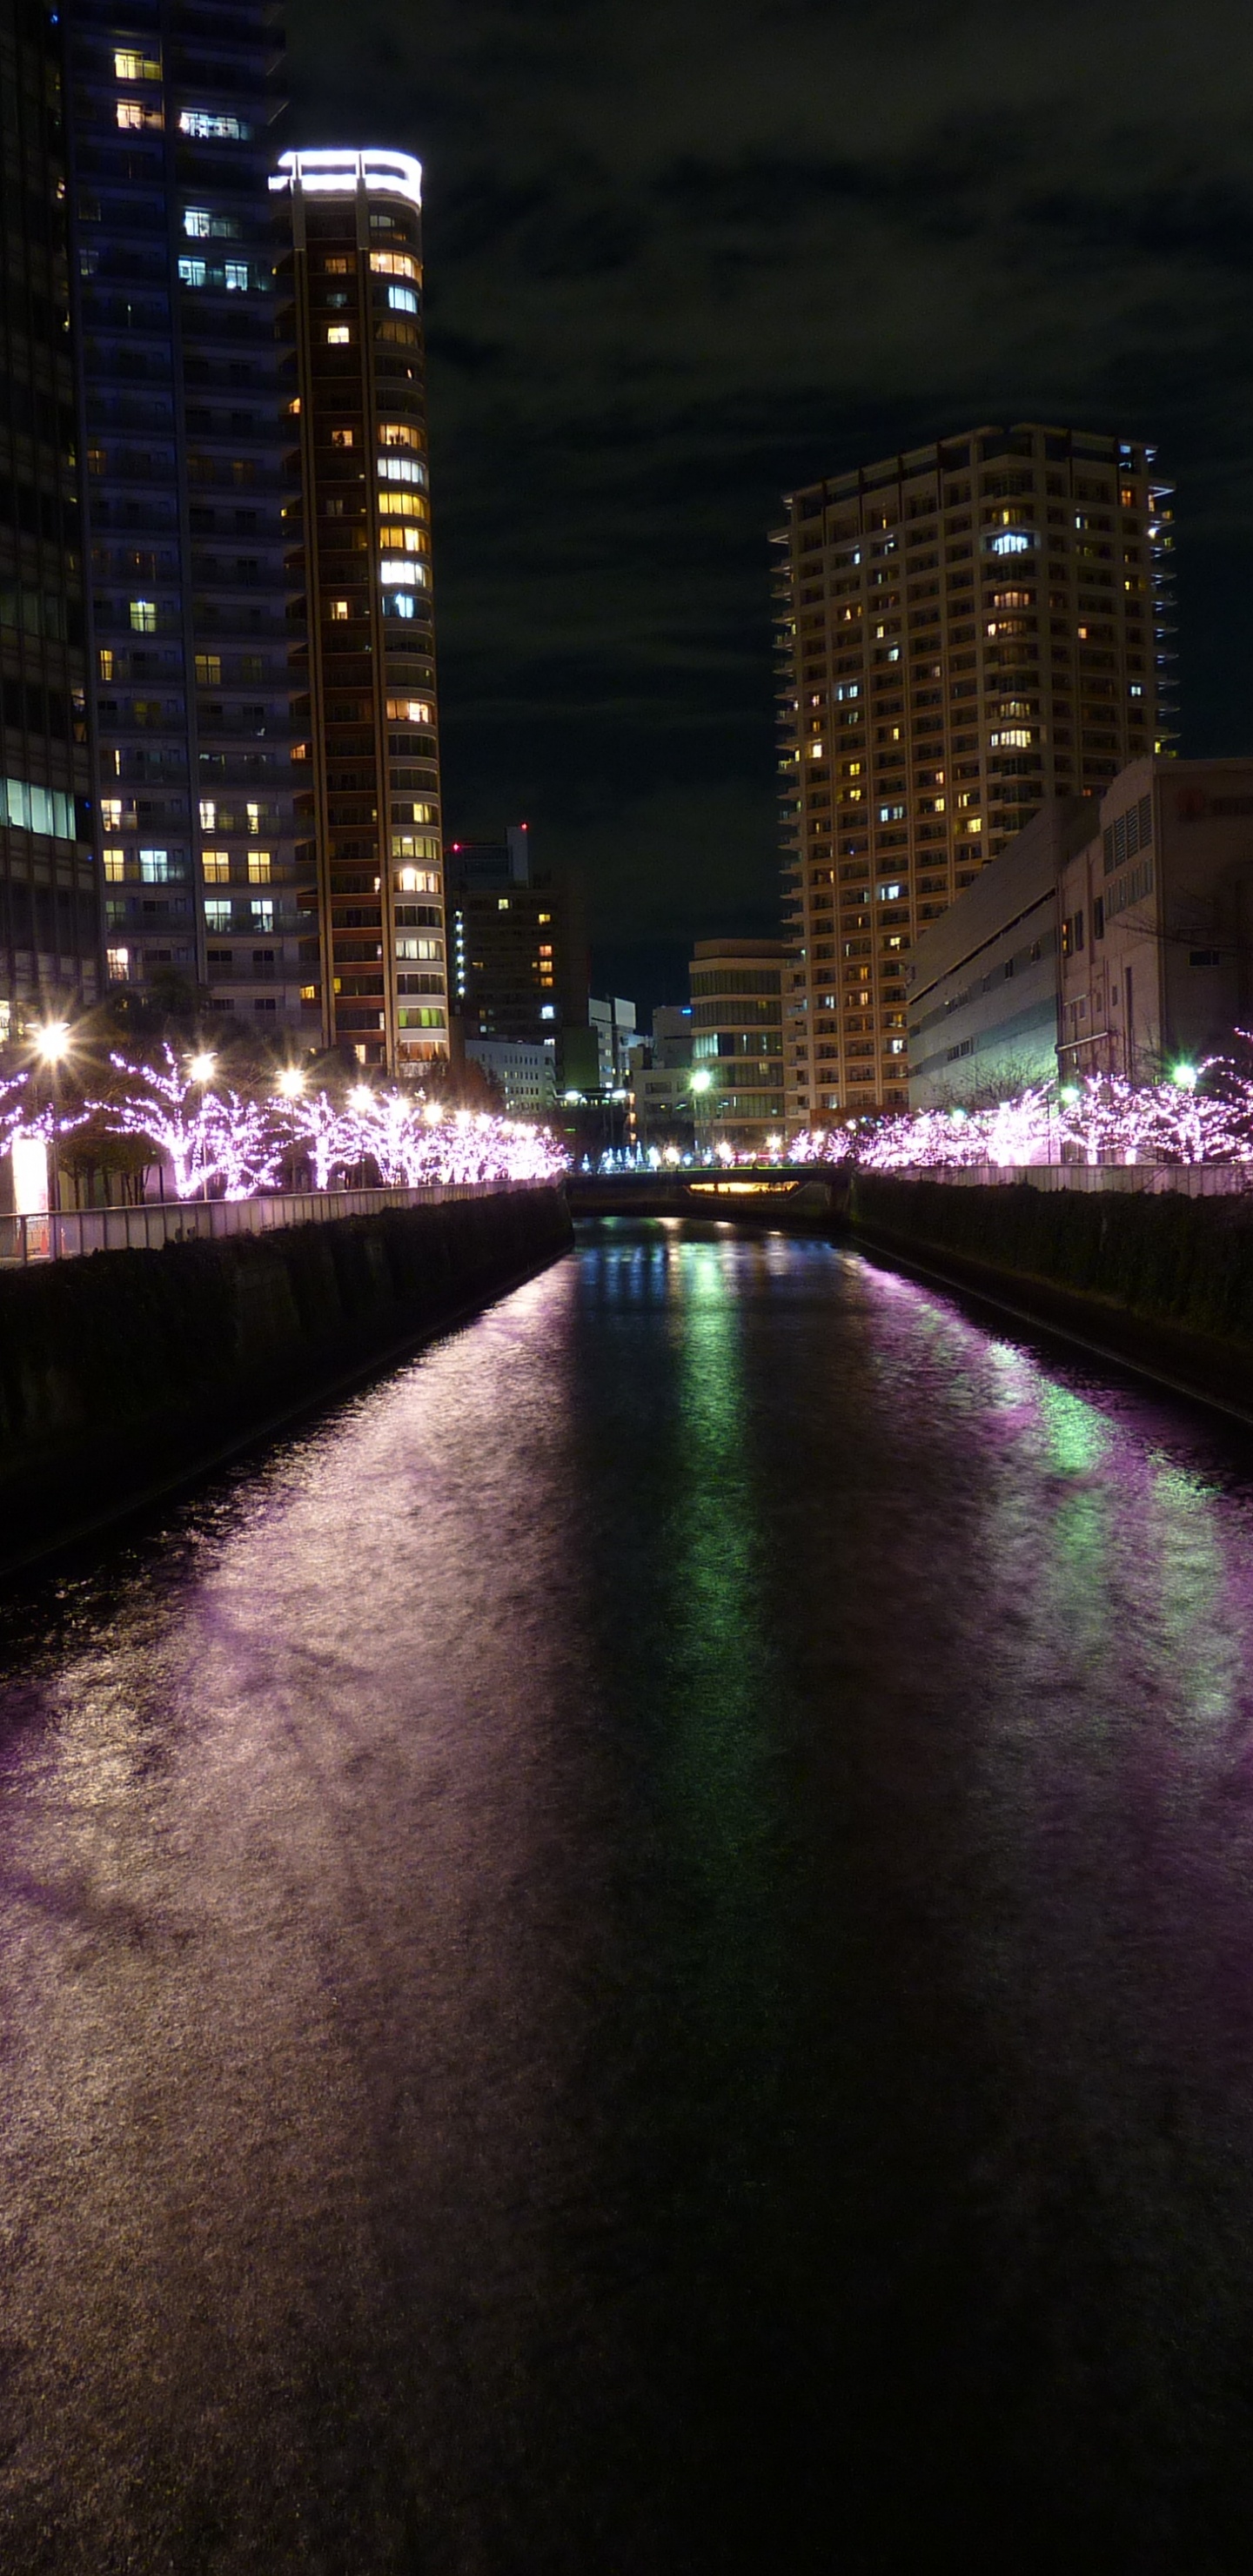 Purple Lights on Bridge During Night Time. Wallpaper in 1440x2960 Resolution